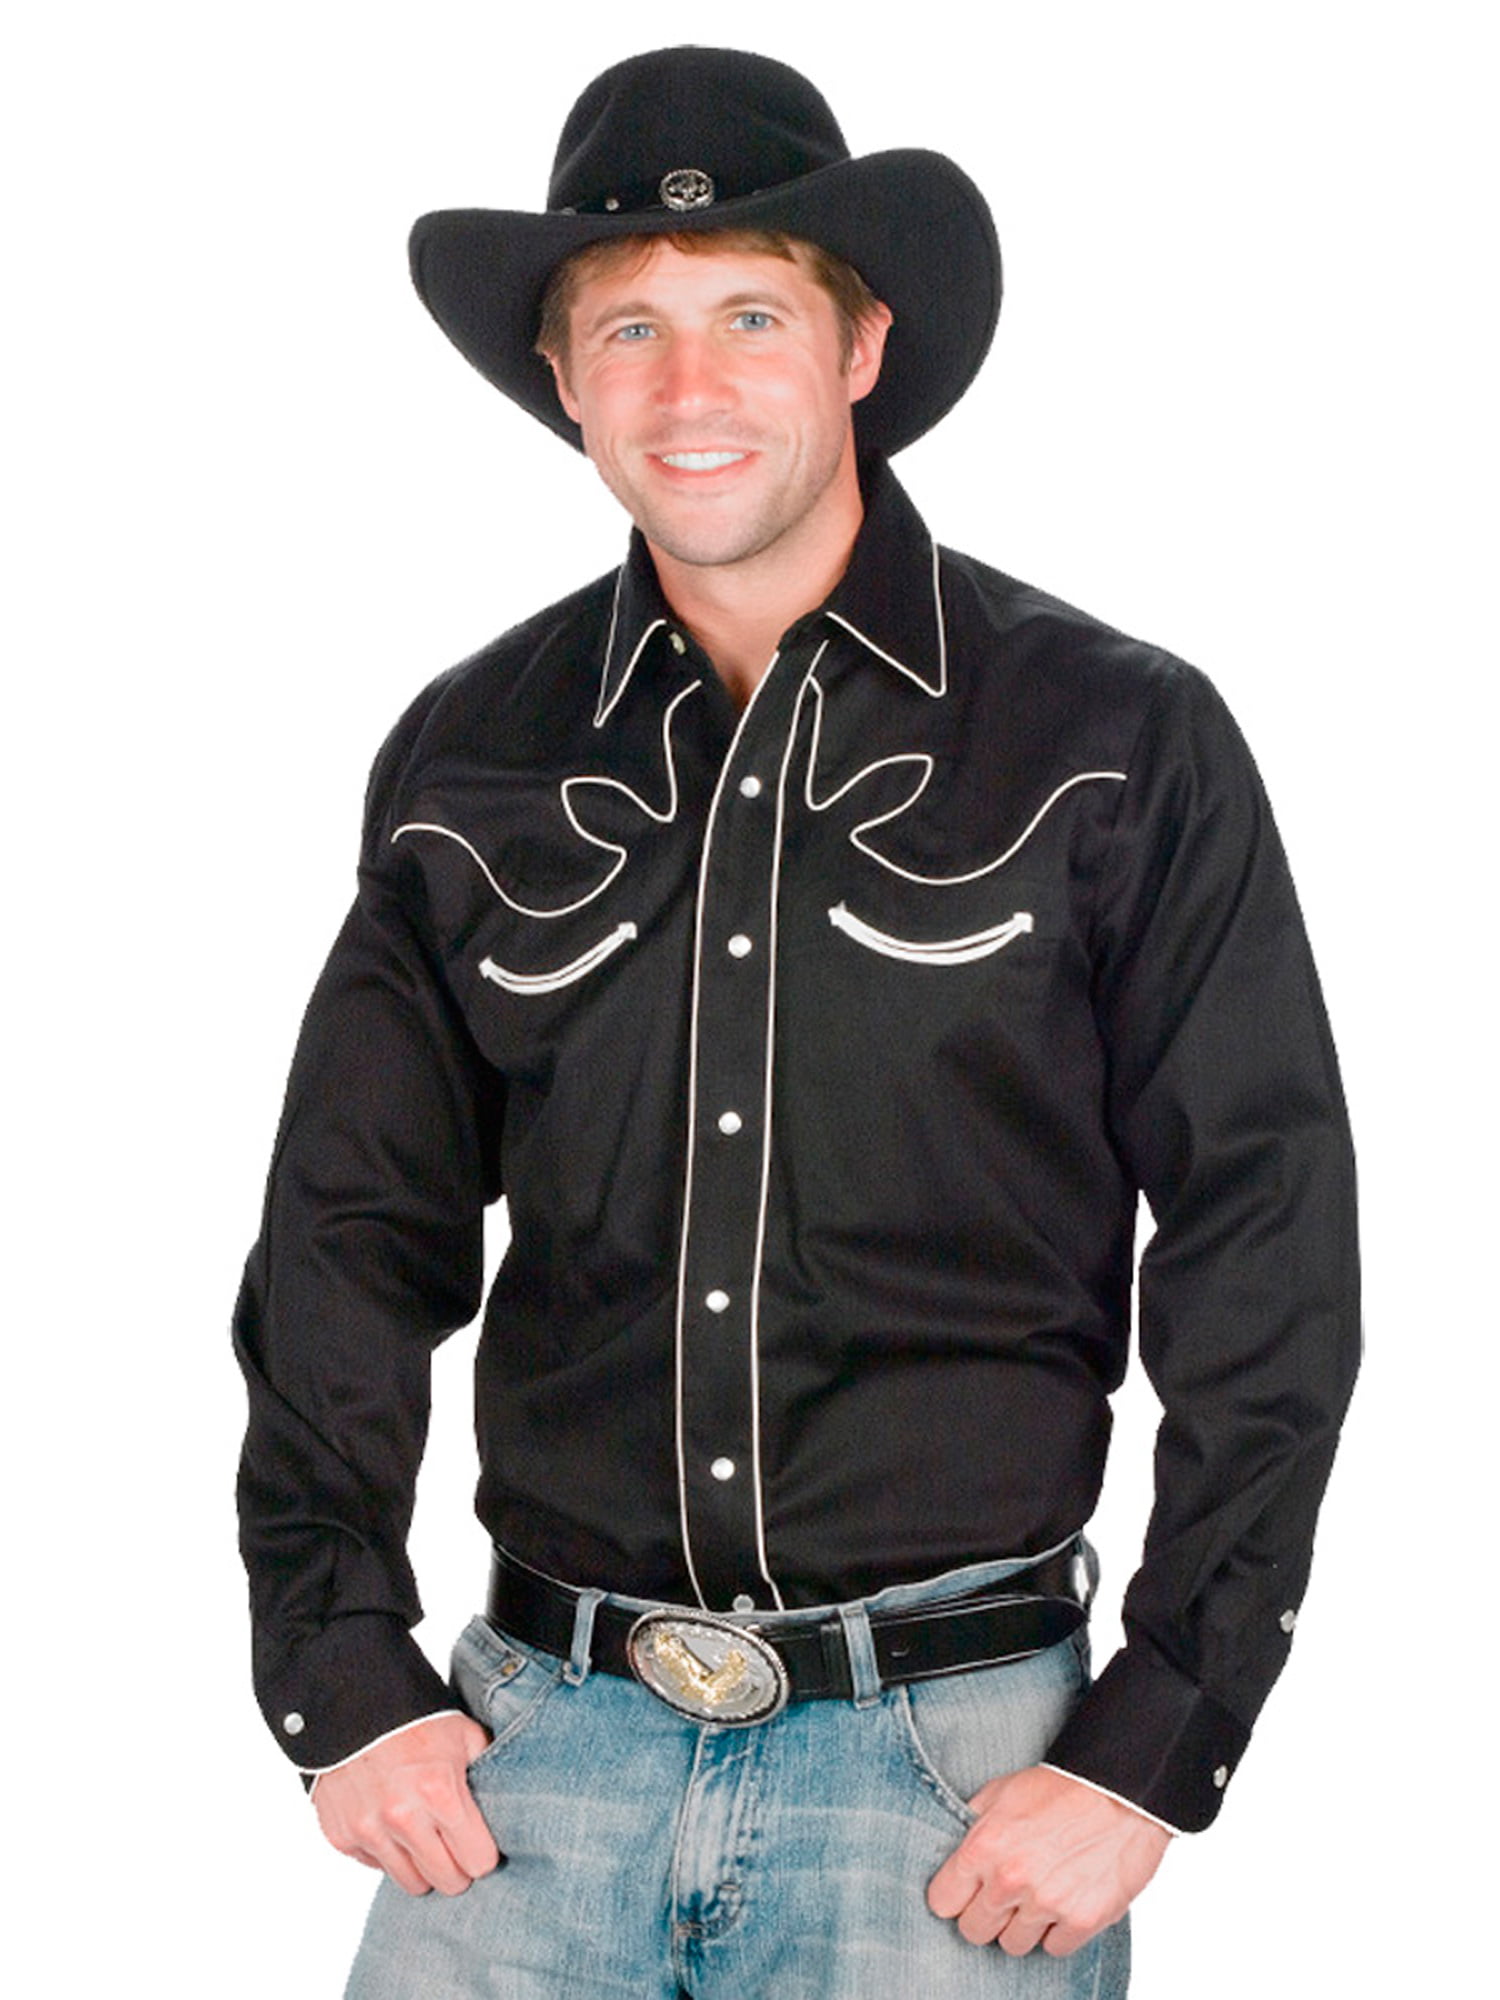 Sunrise Outlet Childrens Solid Button Down Cotton Western Cowboy Shirt